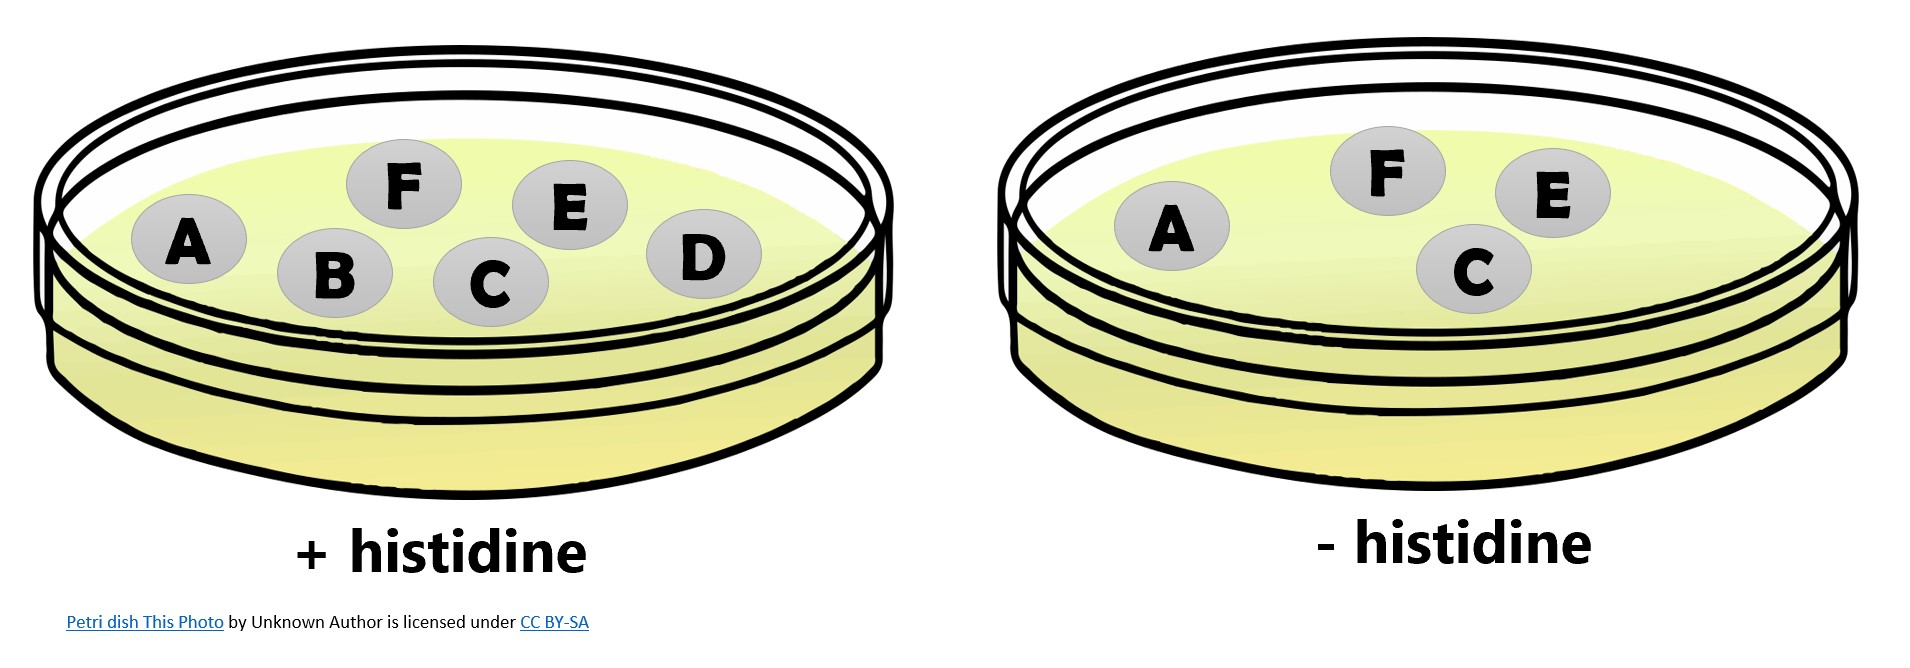 petri dish with histidine has colonies A B C D E and F. petri dish without histidine has colonies A C E and F. 